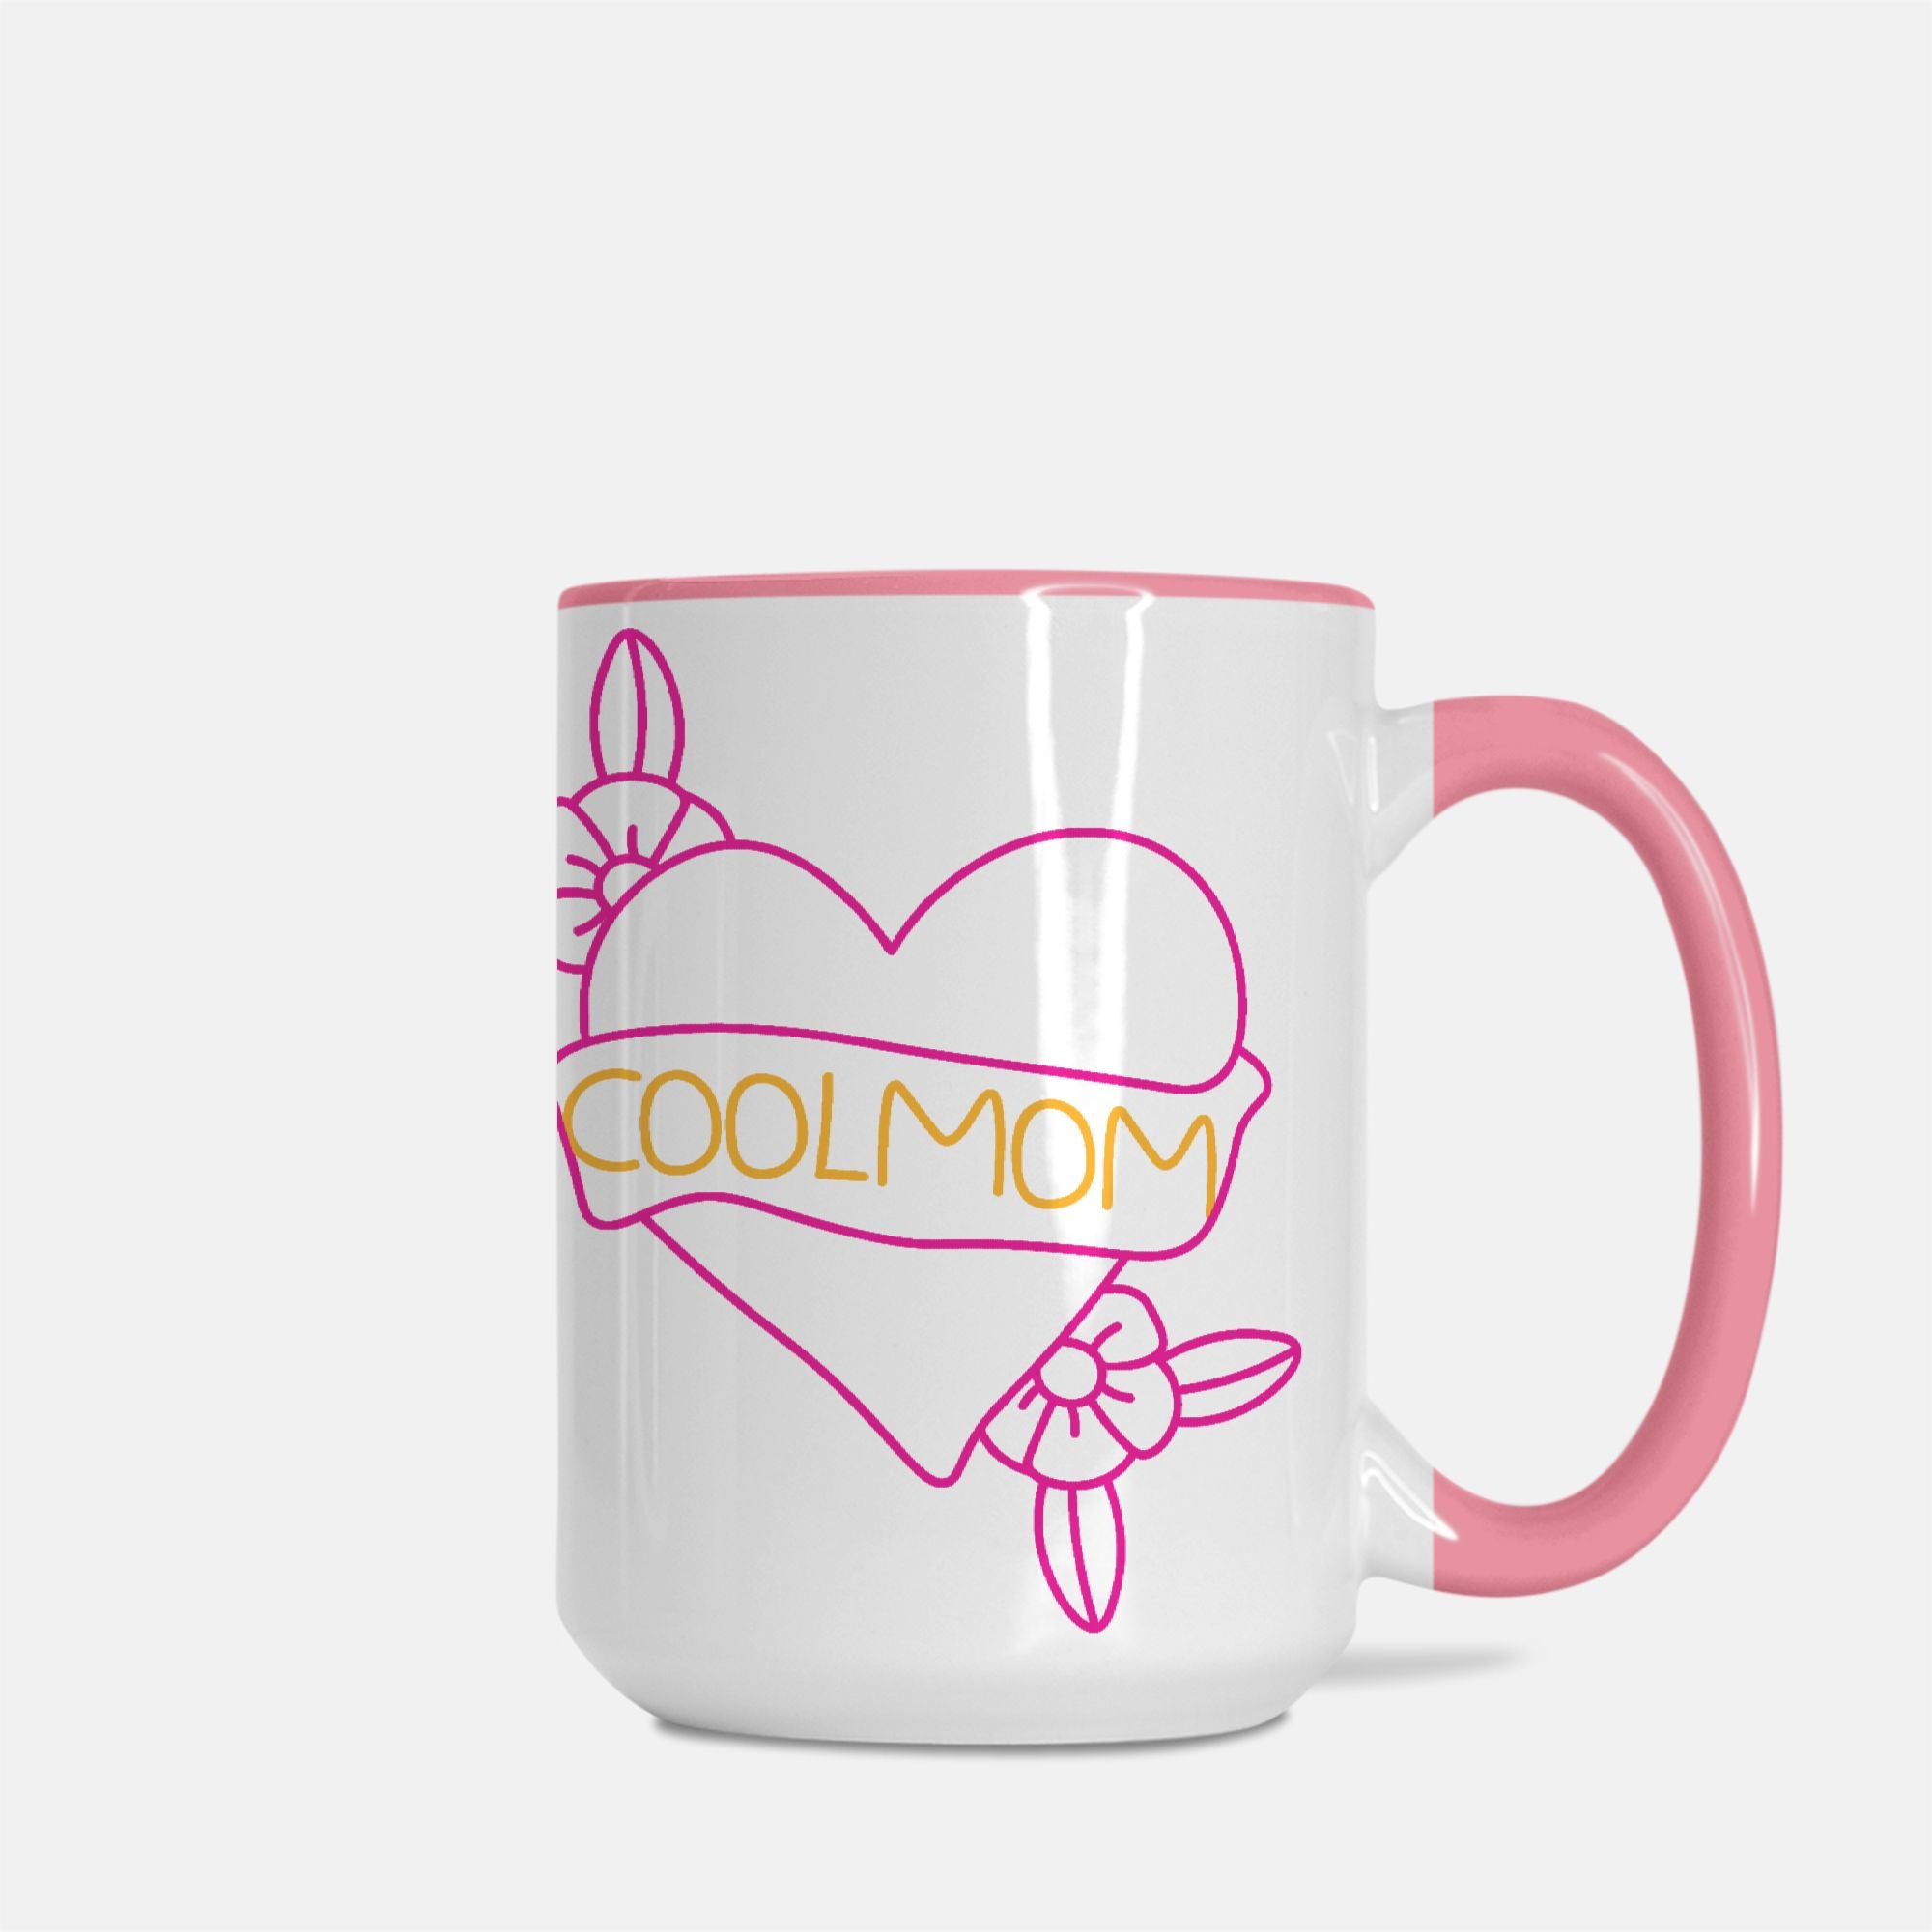 Cool Mom Mug Deluxe 15oz. (Pink + White)